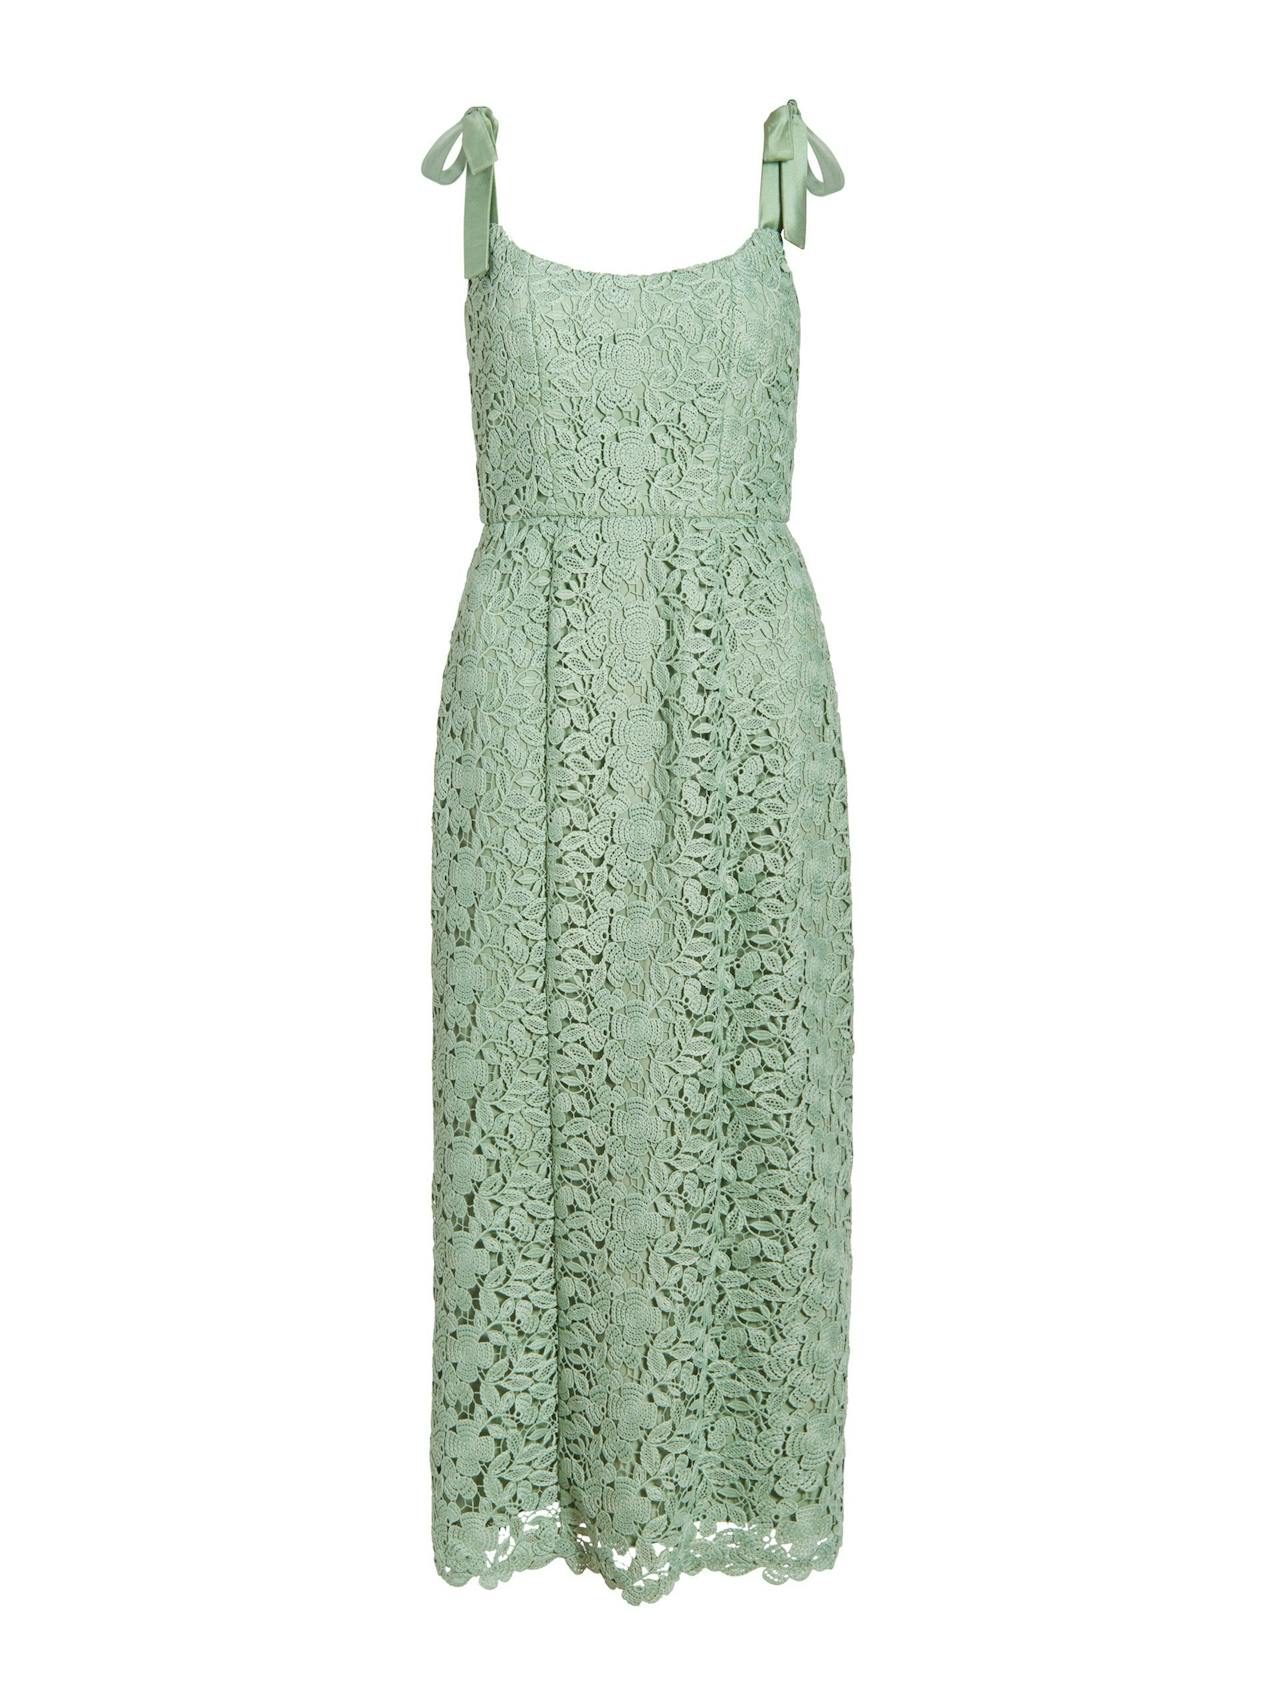 Green crochet corset Poppy midi dress